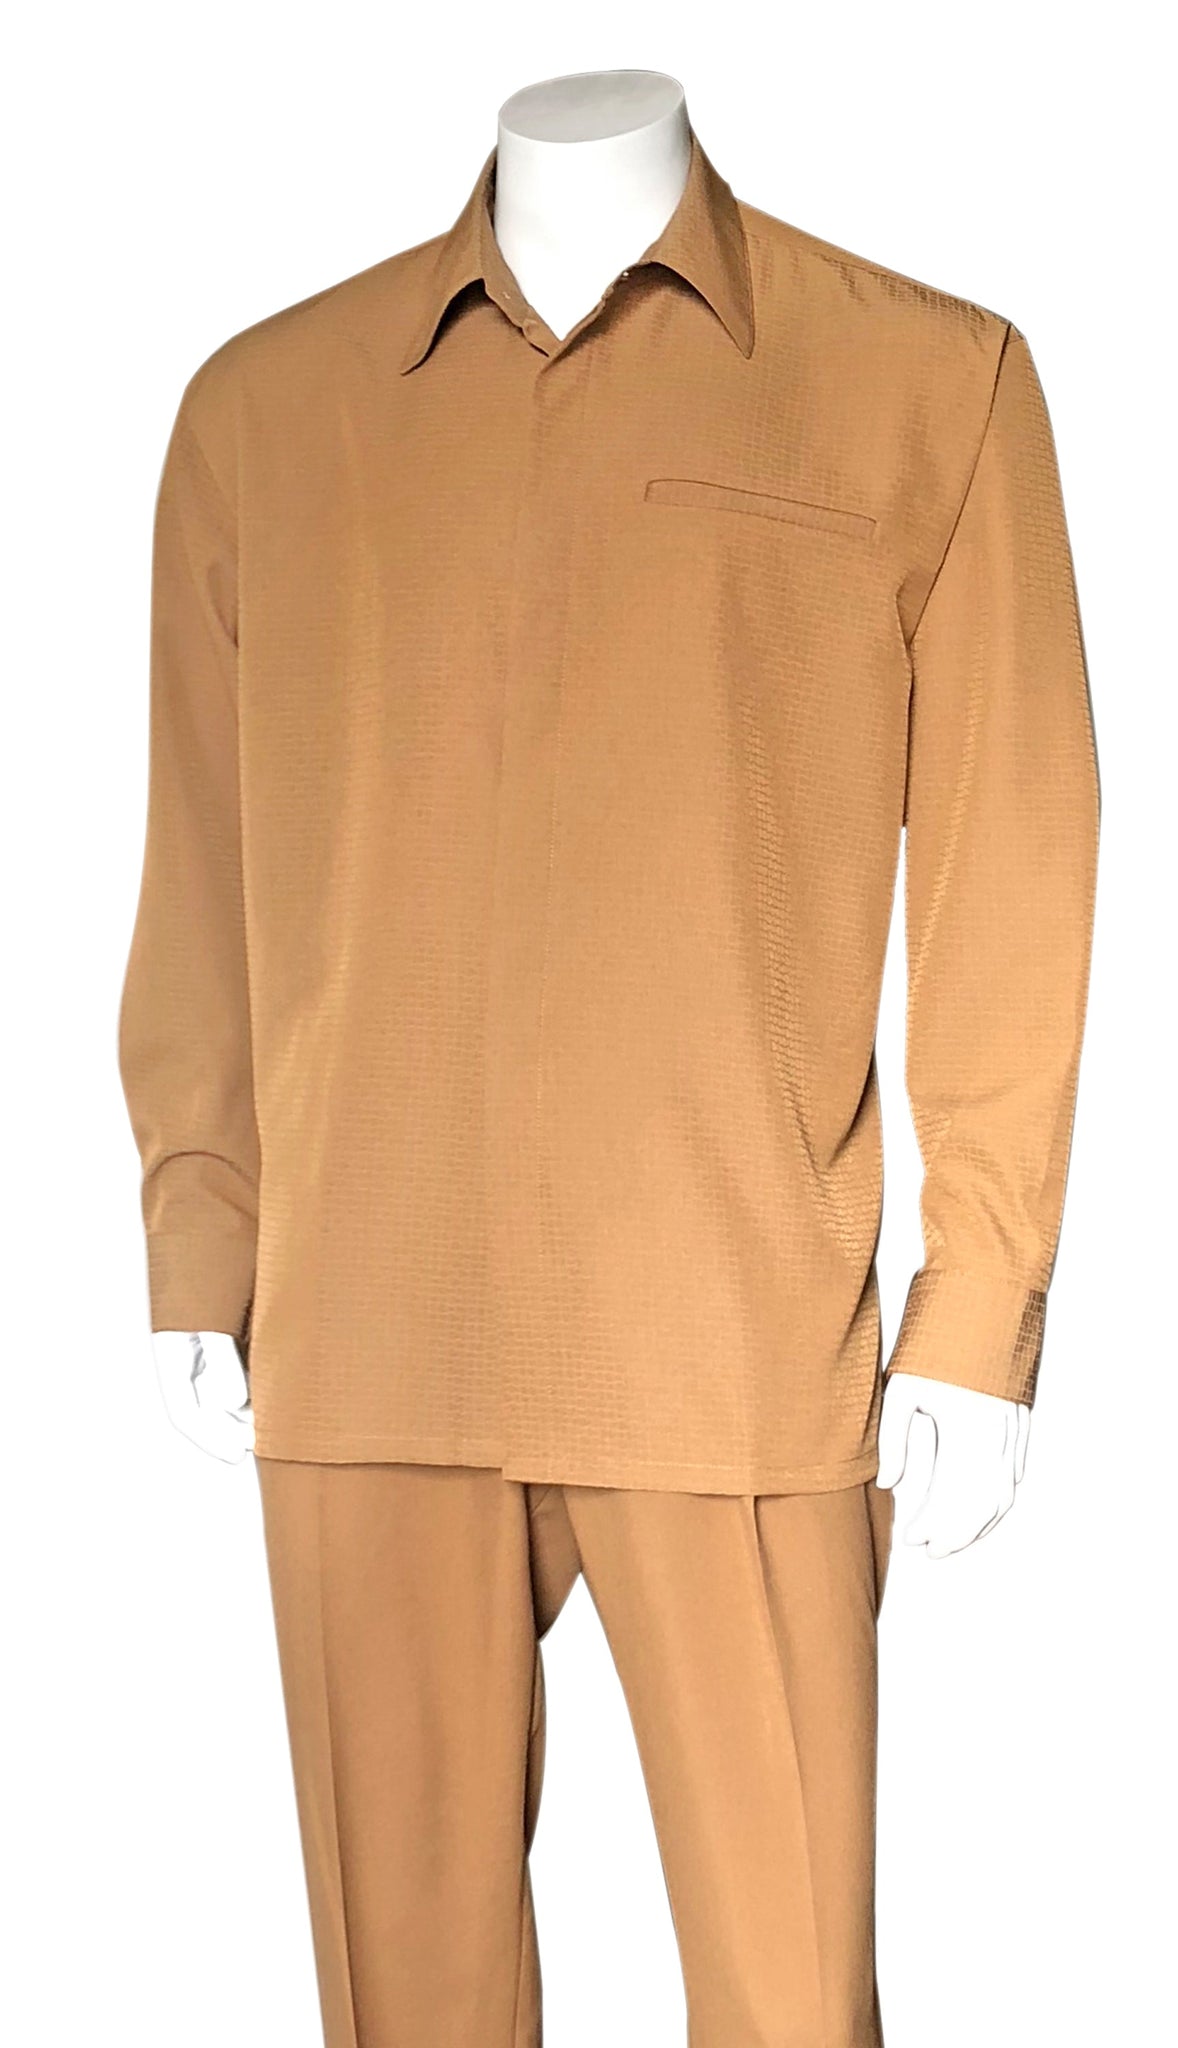 Fortino Landi Walking Set M2763C-Gold - Church Suits For Less